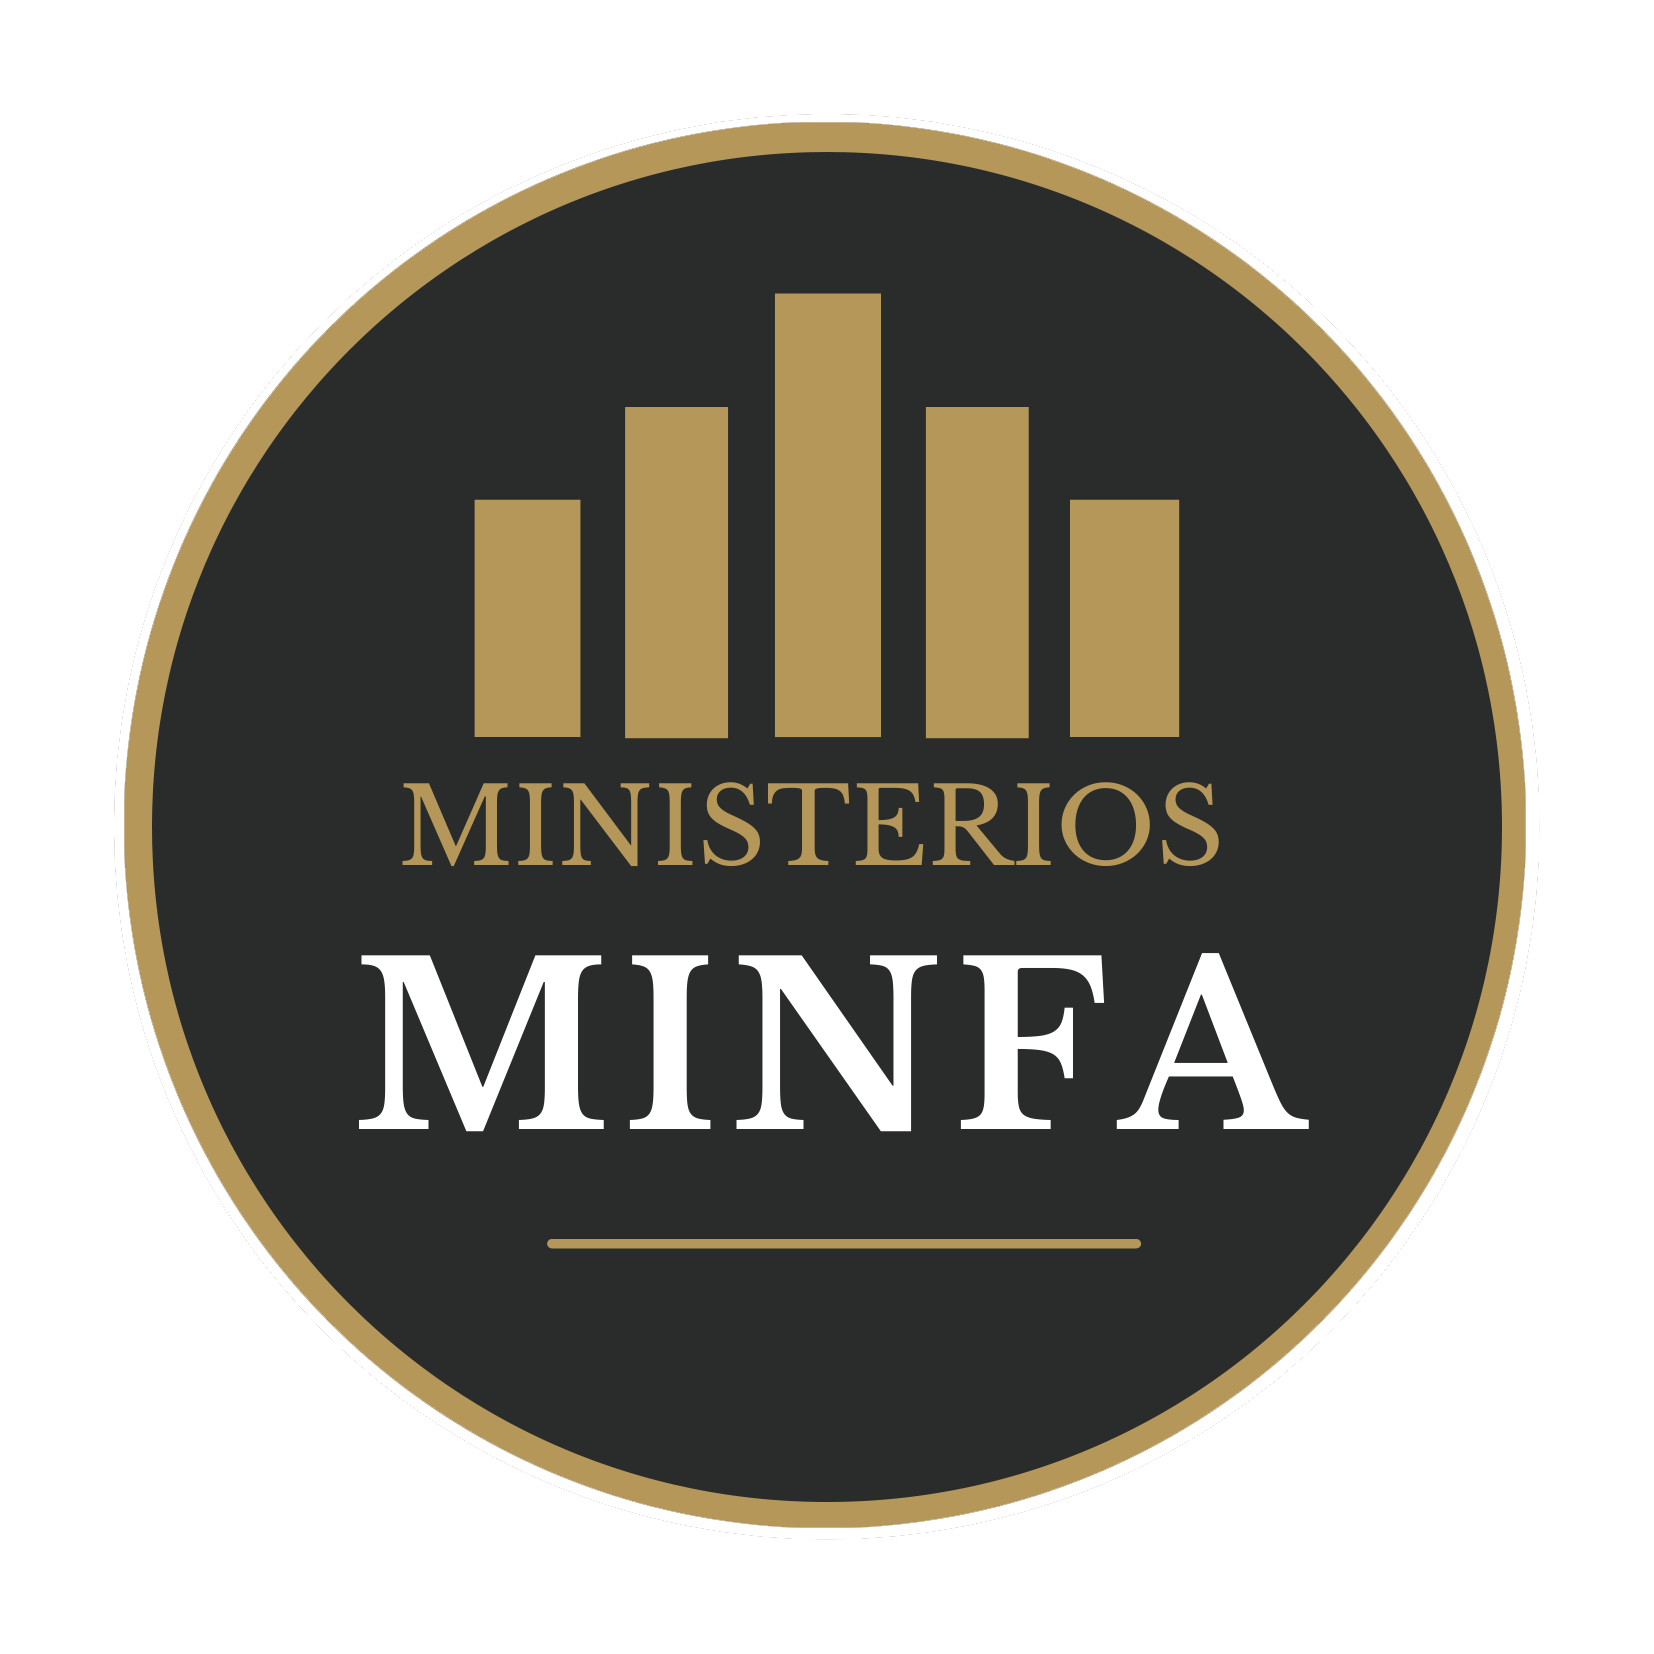 MINFA Logo